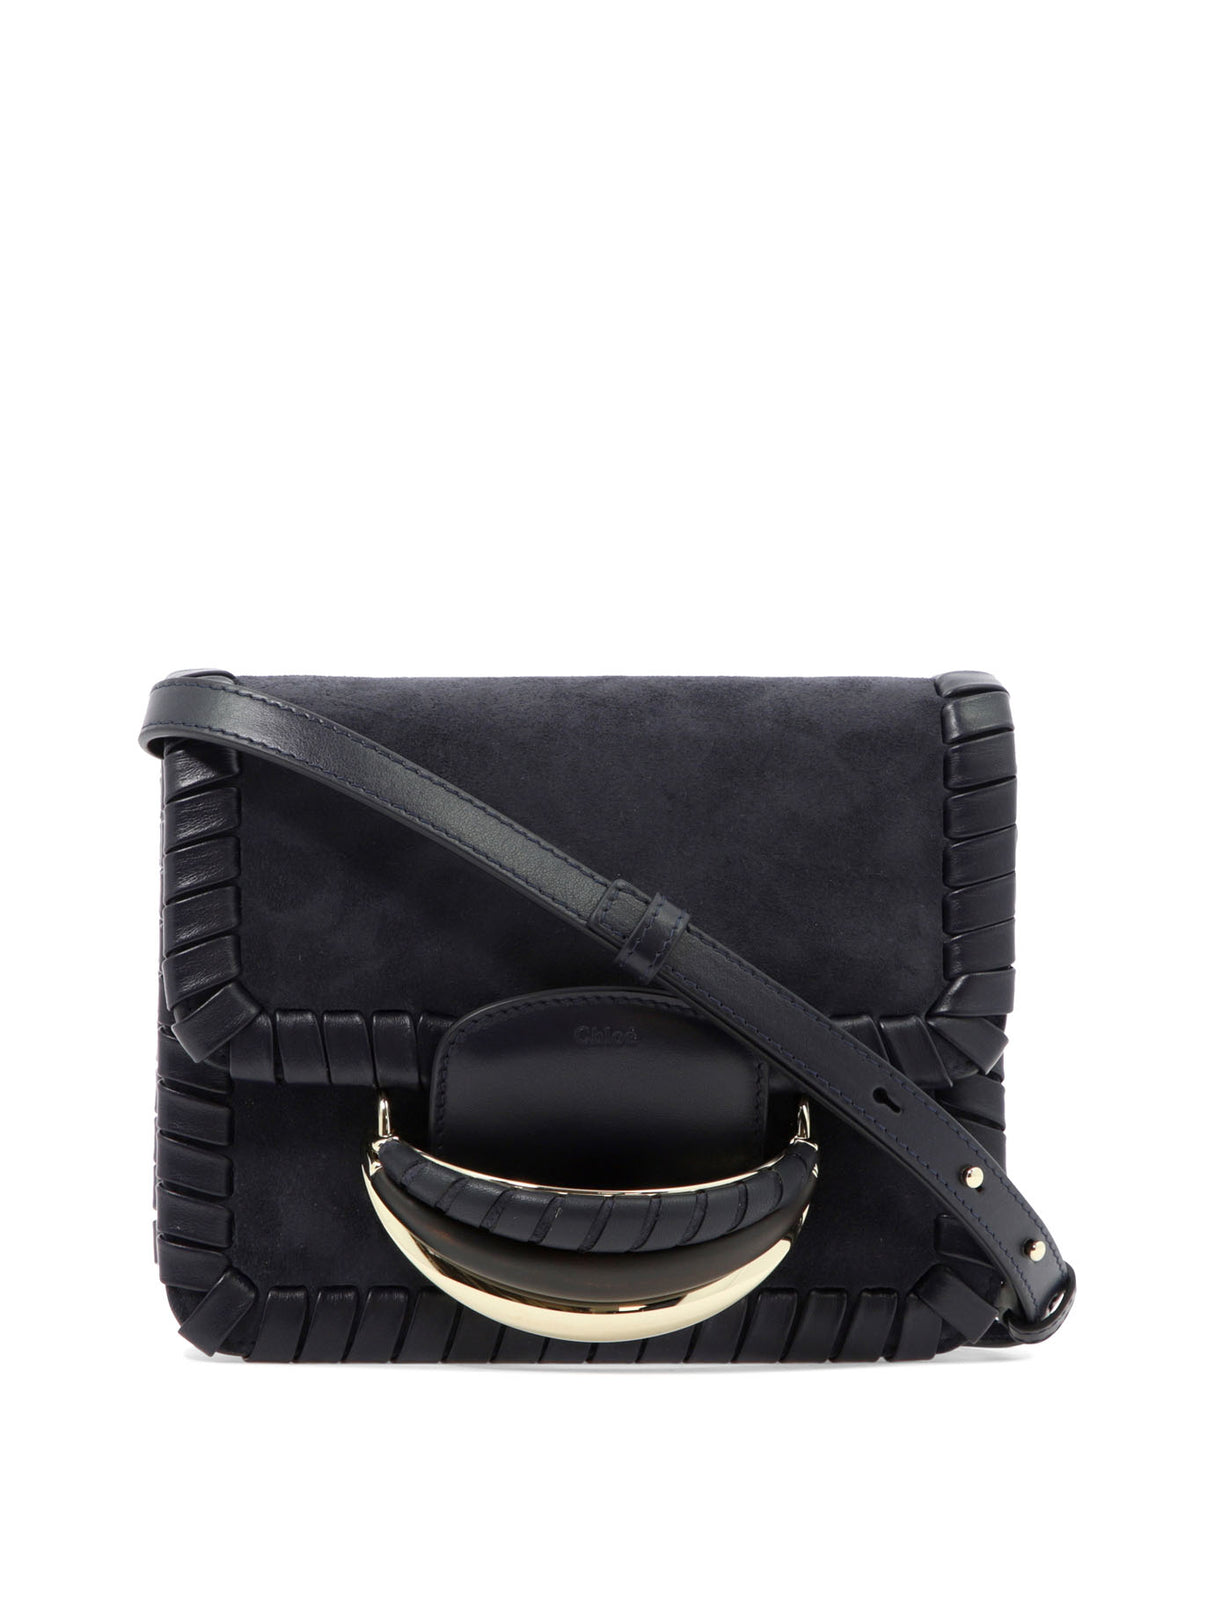 CHLOÉ Blue Crossbody Bag for Women - FW22 Collection